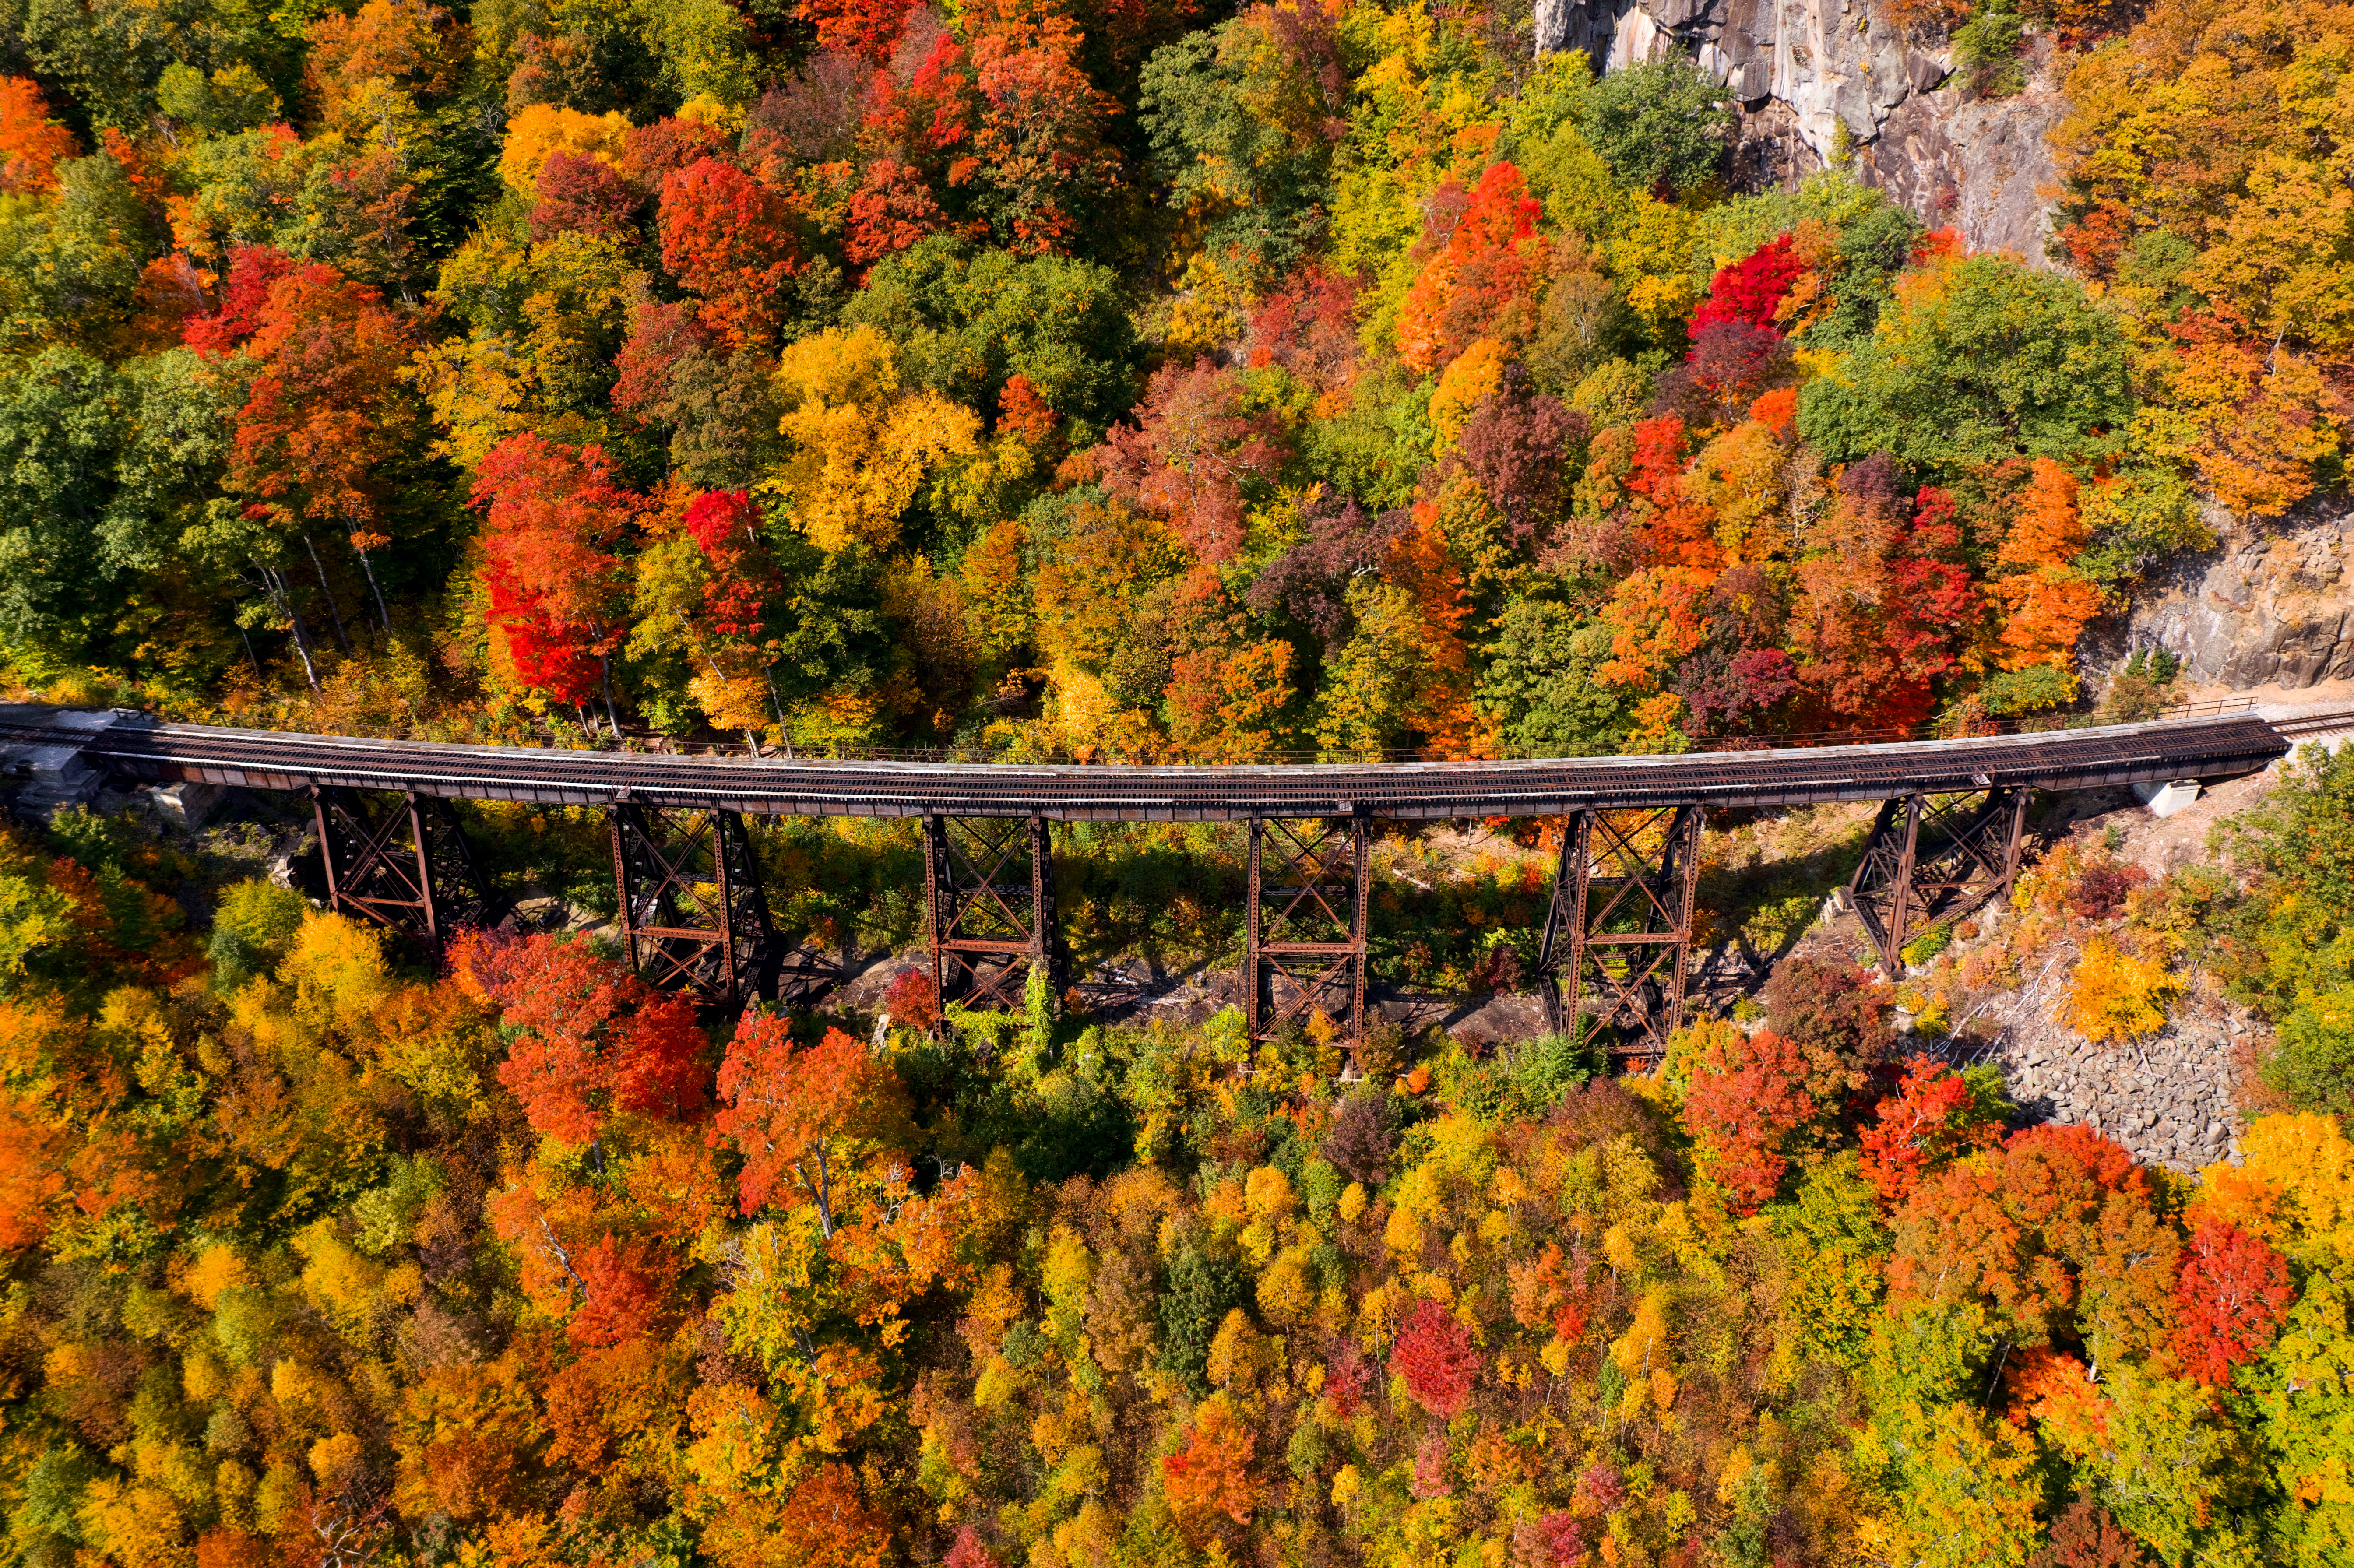 The railroad bridge amidst the fall leaves